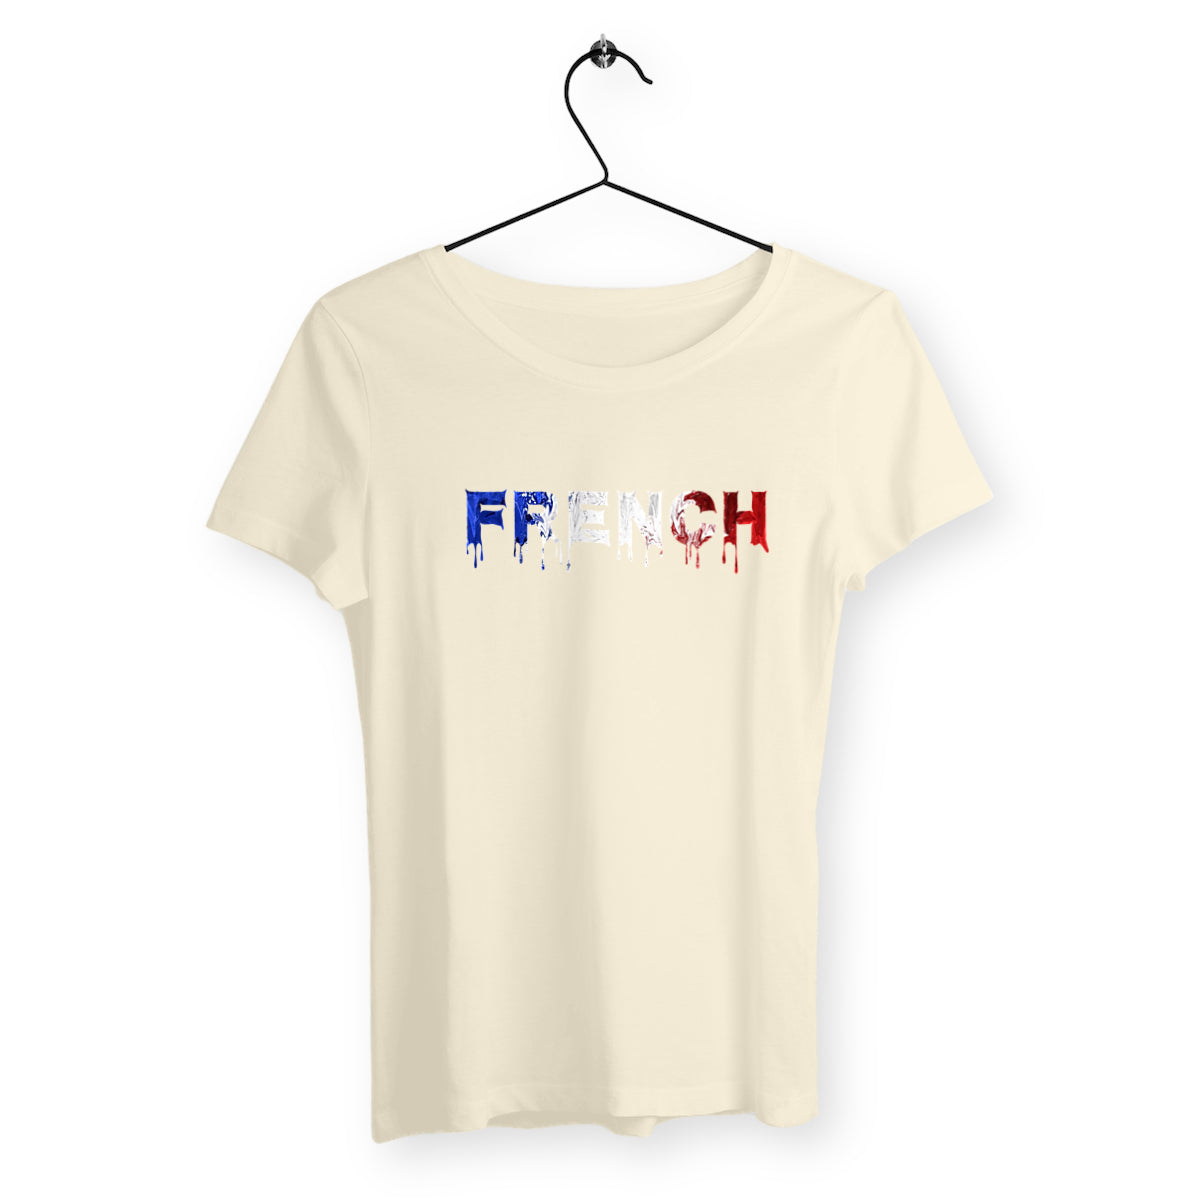 T-Shirt Femme Bio - Peinture French, t-shirt femme coton bio noir peinture french T-French, t-shirt french, t-shirt french touch femme, tee shirt french peinture naturel